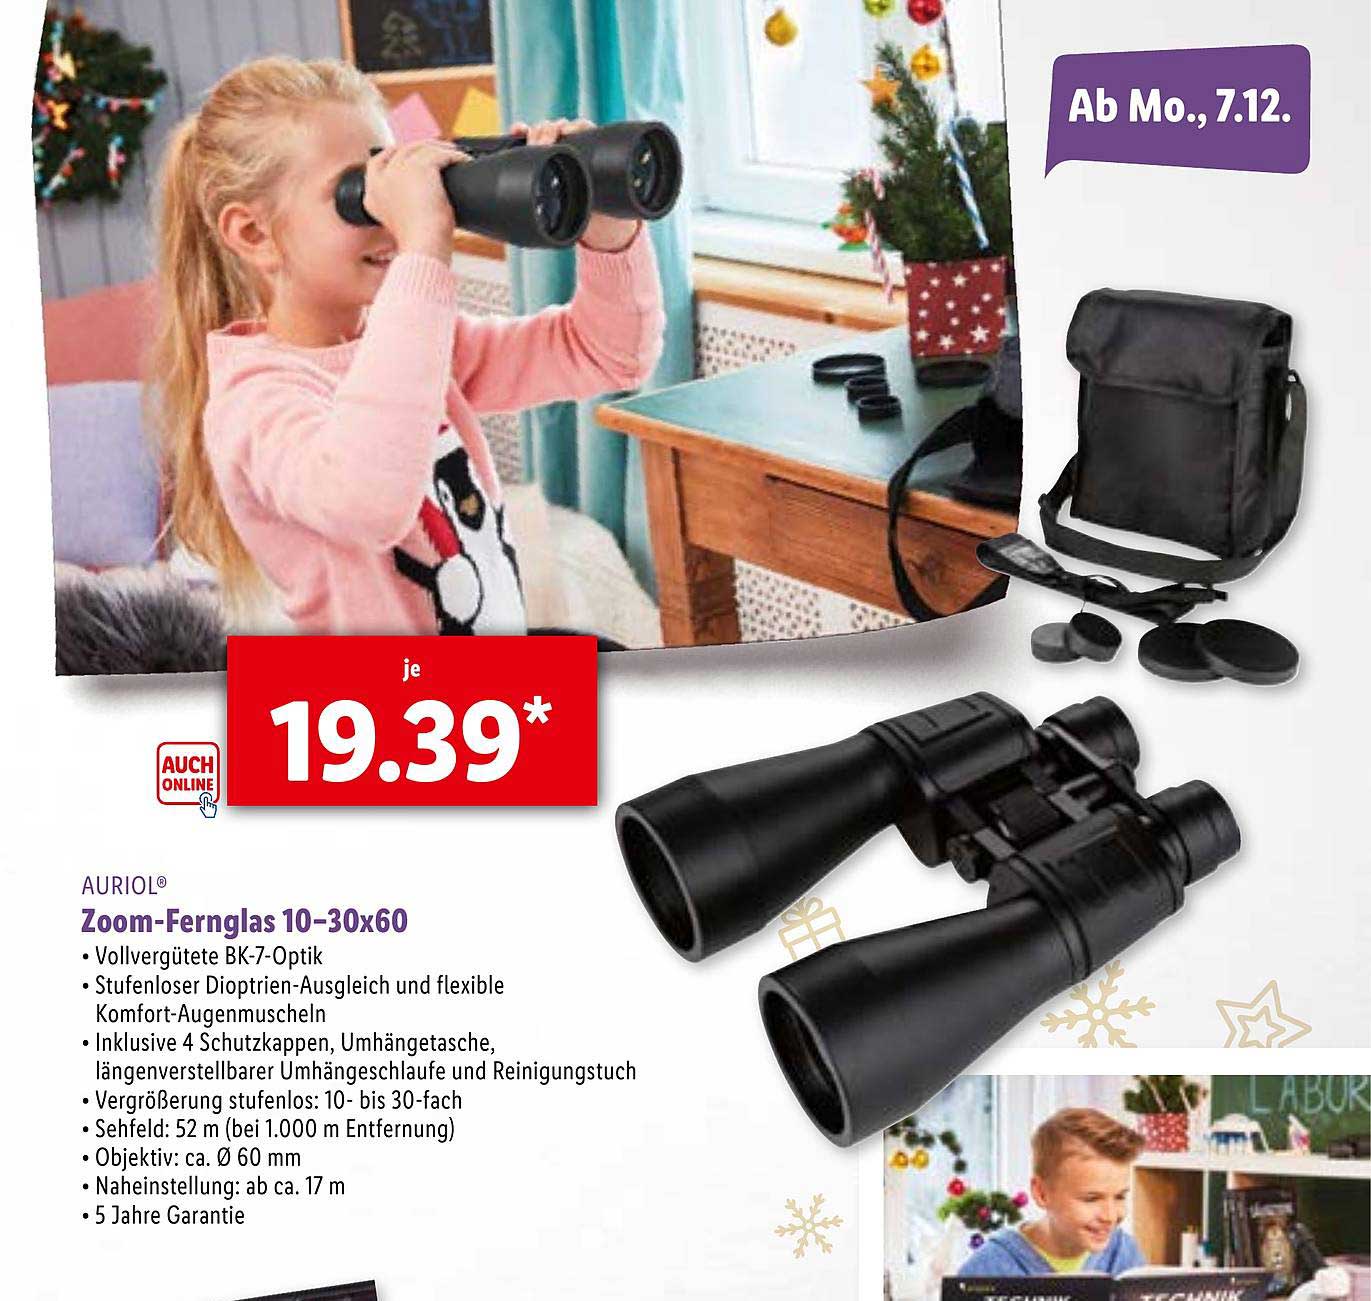 Auriol Zoom Fernglas 10 30x60 Angebot bei Lidl